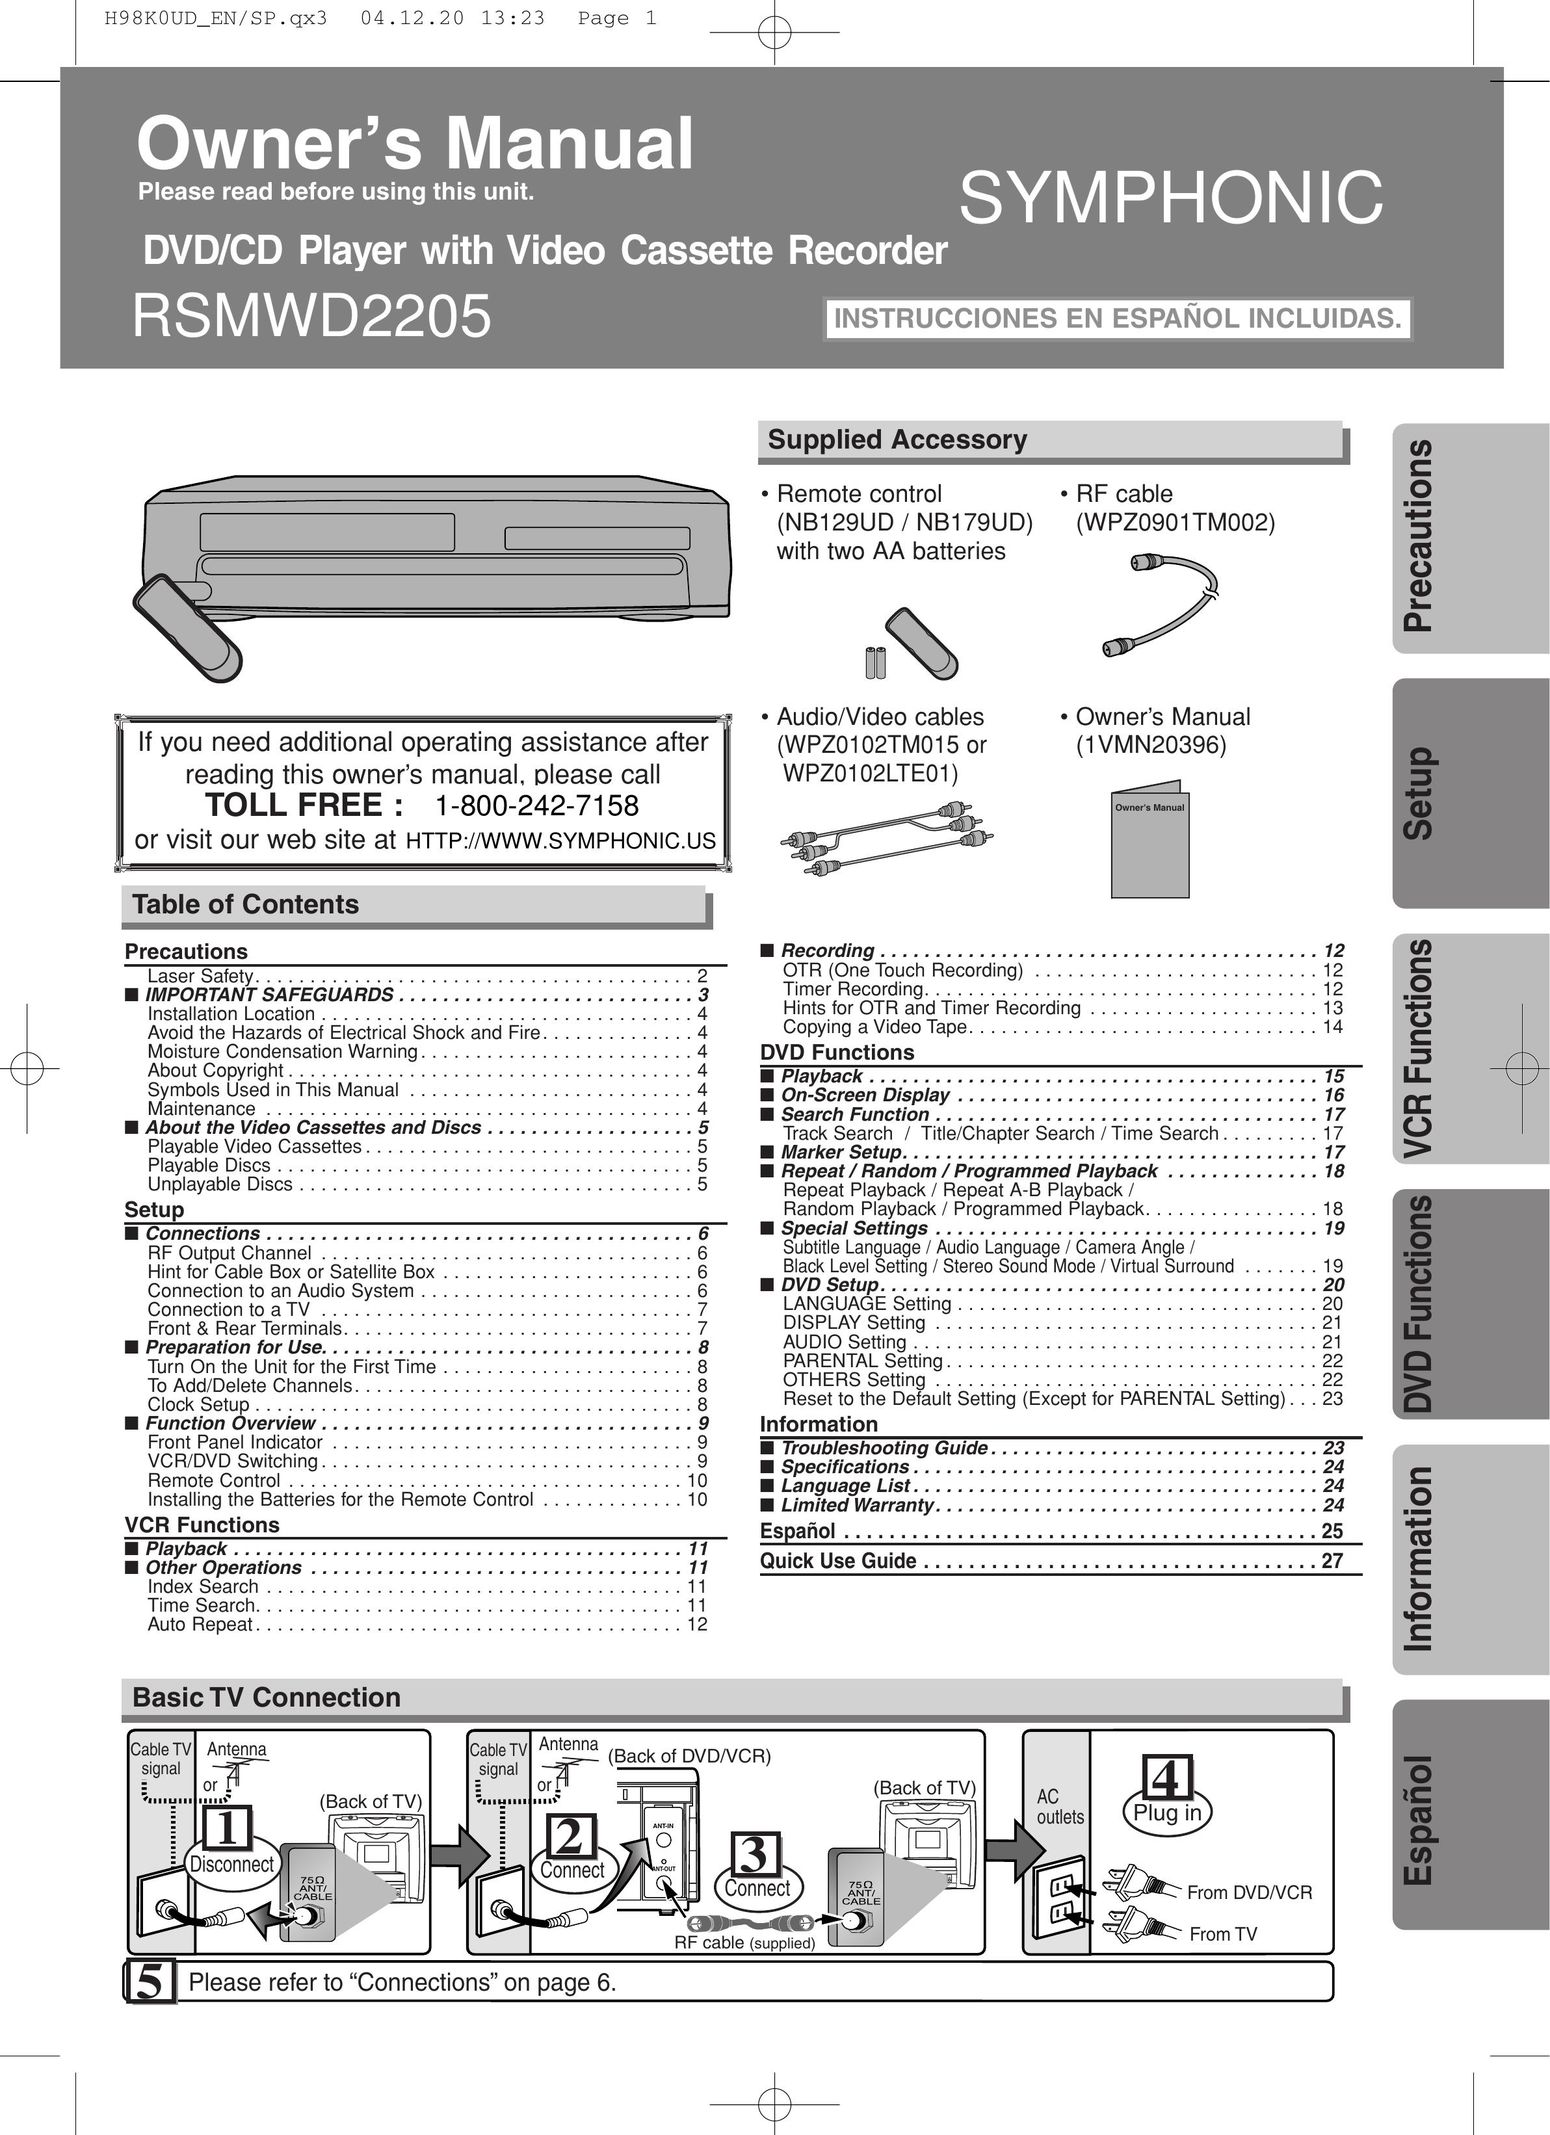 Symphonic RSMWD2205 DVD VCR Combo User Manual